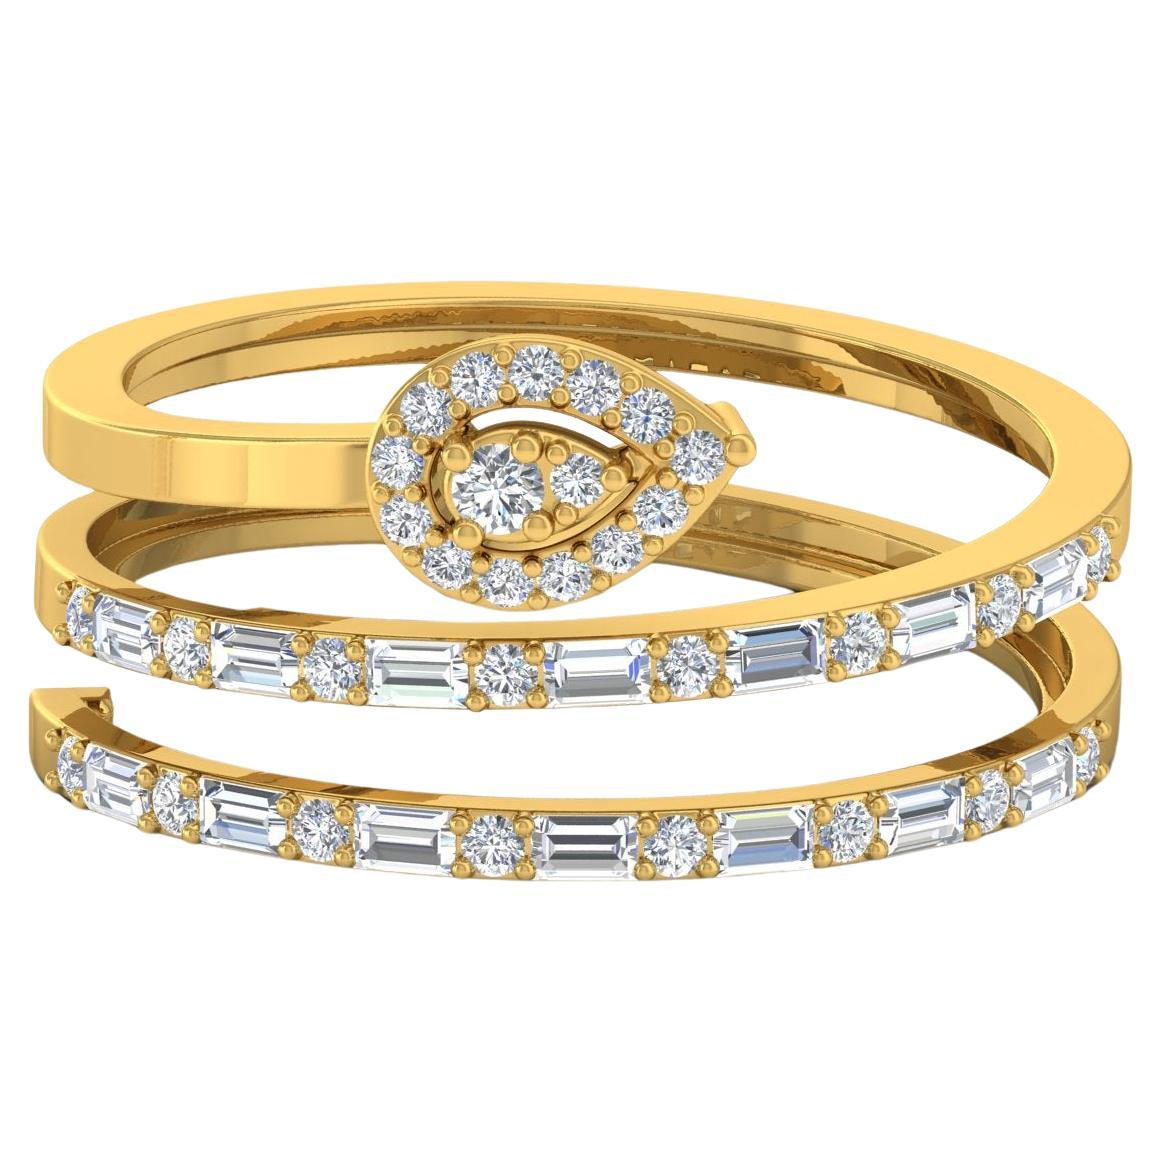 Bague en or jaune 18 carats avec diamants baguettes SI Clarity HI Color